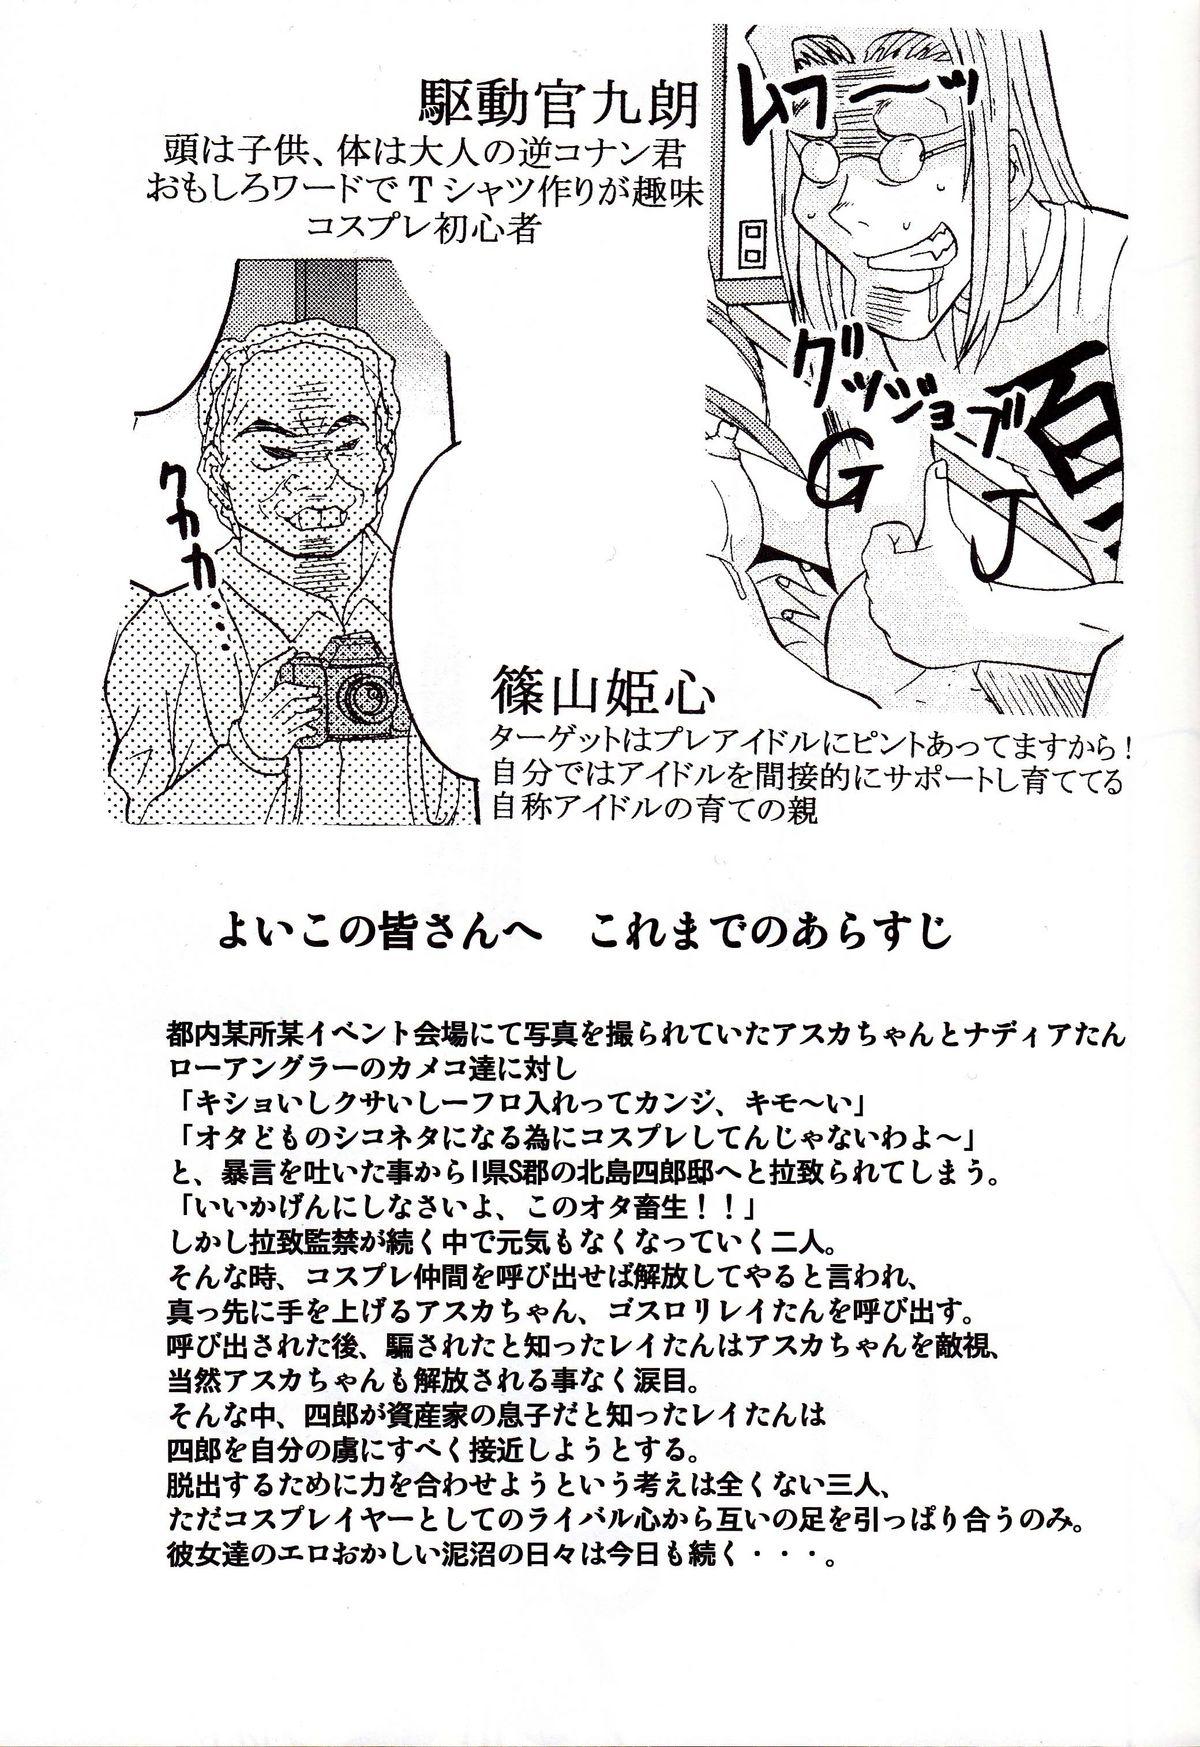 Stunning Hi Energy 9 - Neon genesis evangelion Fushigi no umi no nadia And - Page 6